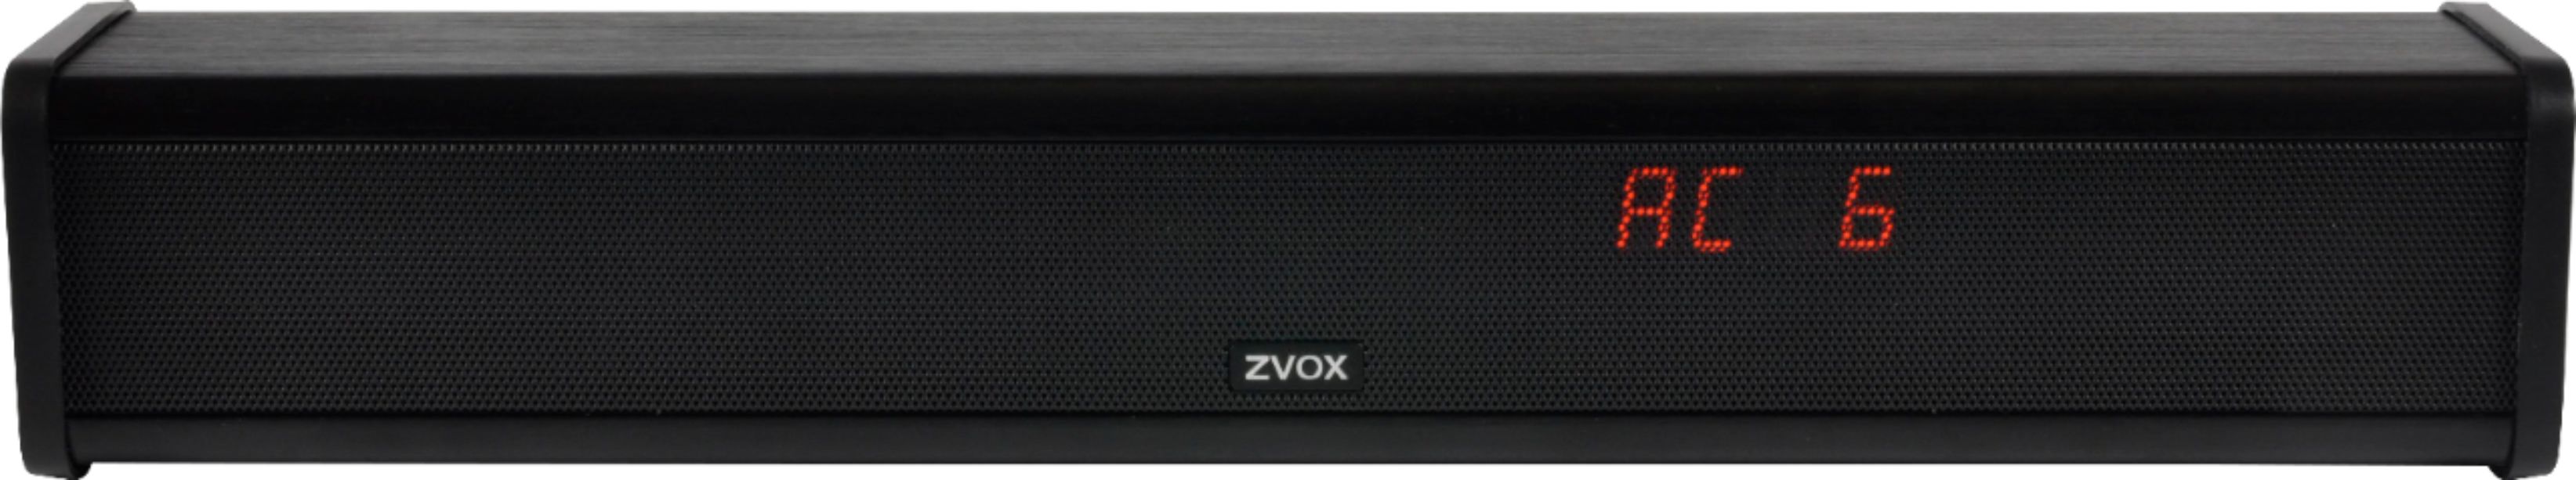 zvox accuvoice soundbar with 6 level audiology